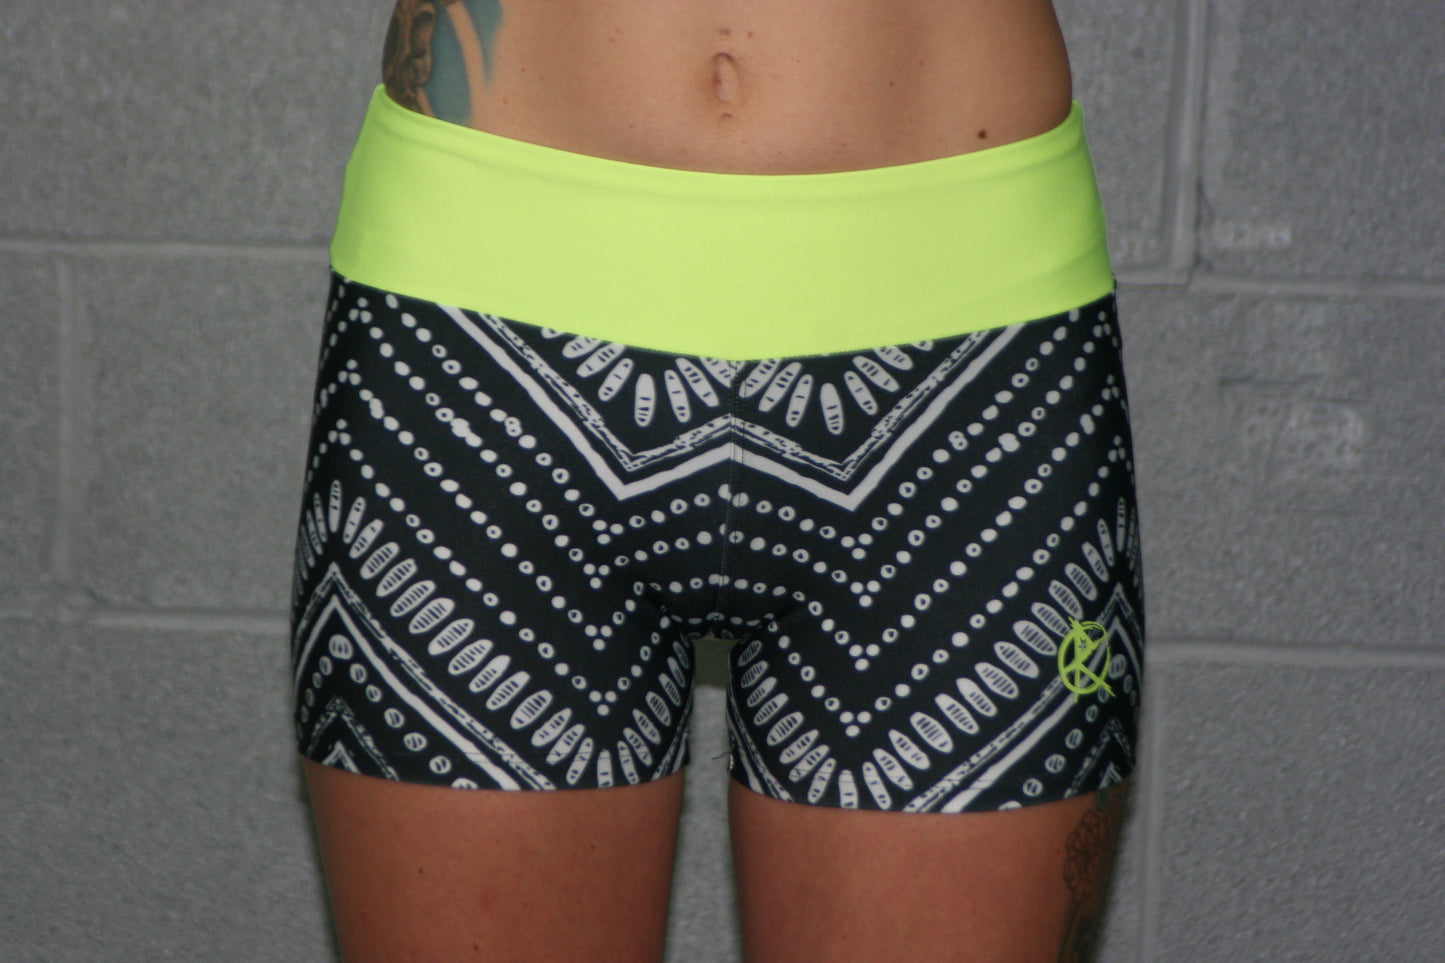 Neon Native Female Shorts